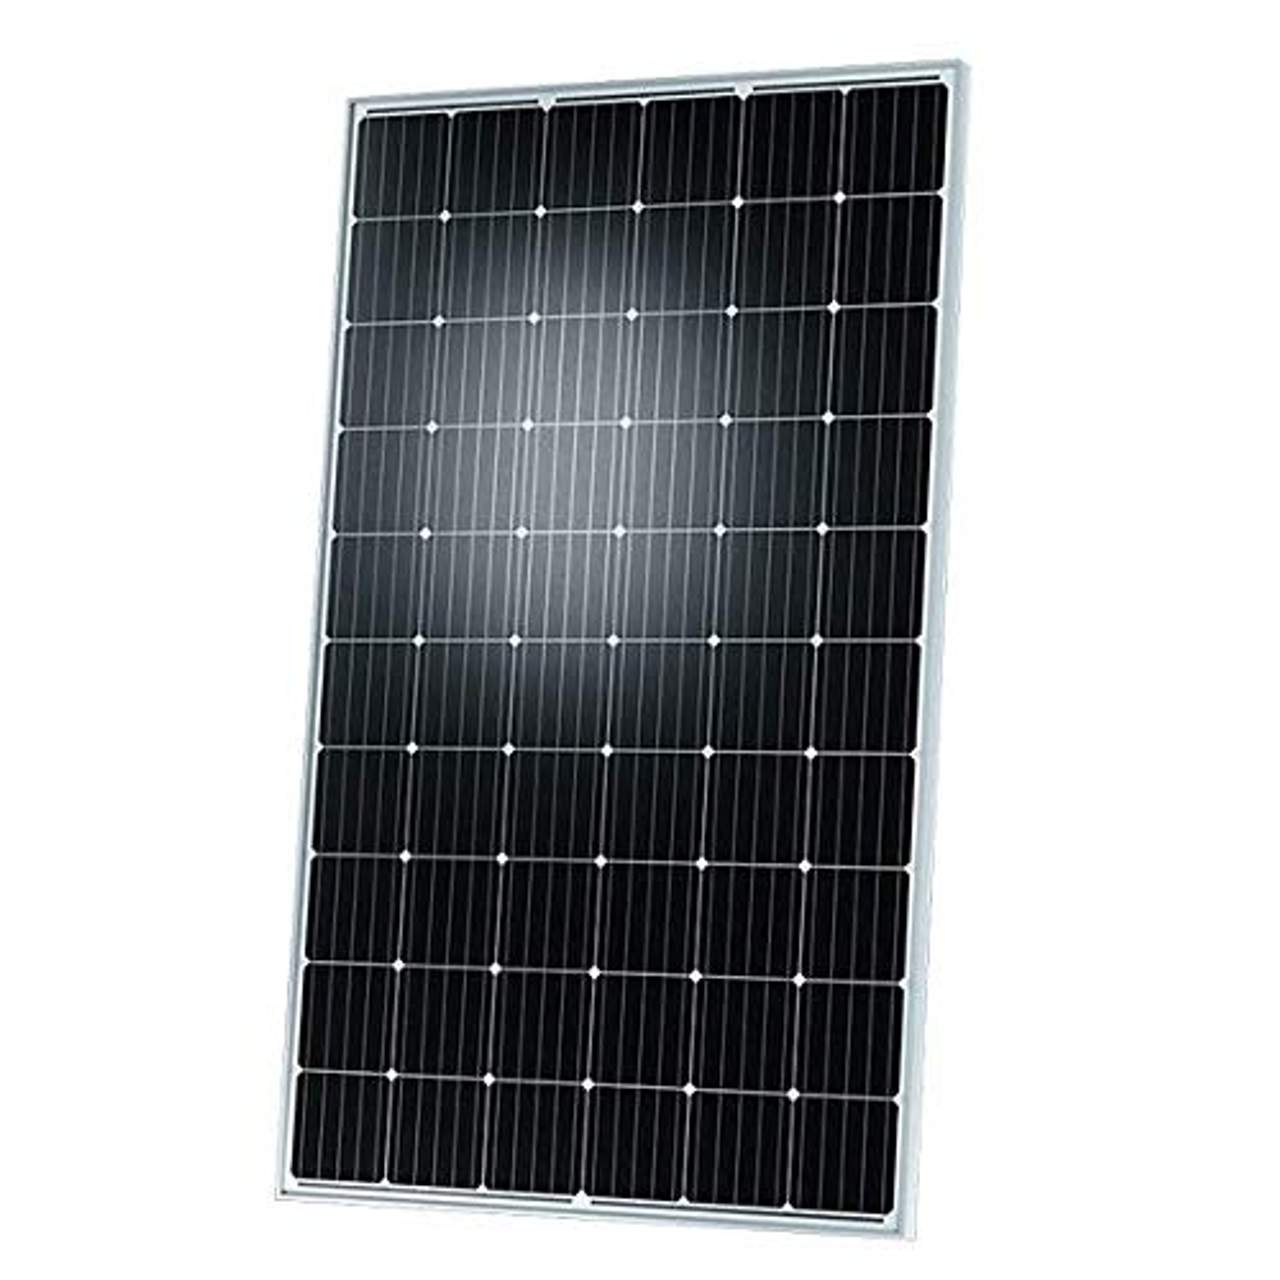 Buderus PV-Anlage PV20 4,48 KWp monokristallin Photovoltaik Solarmodul